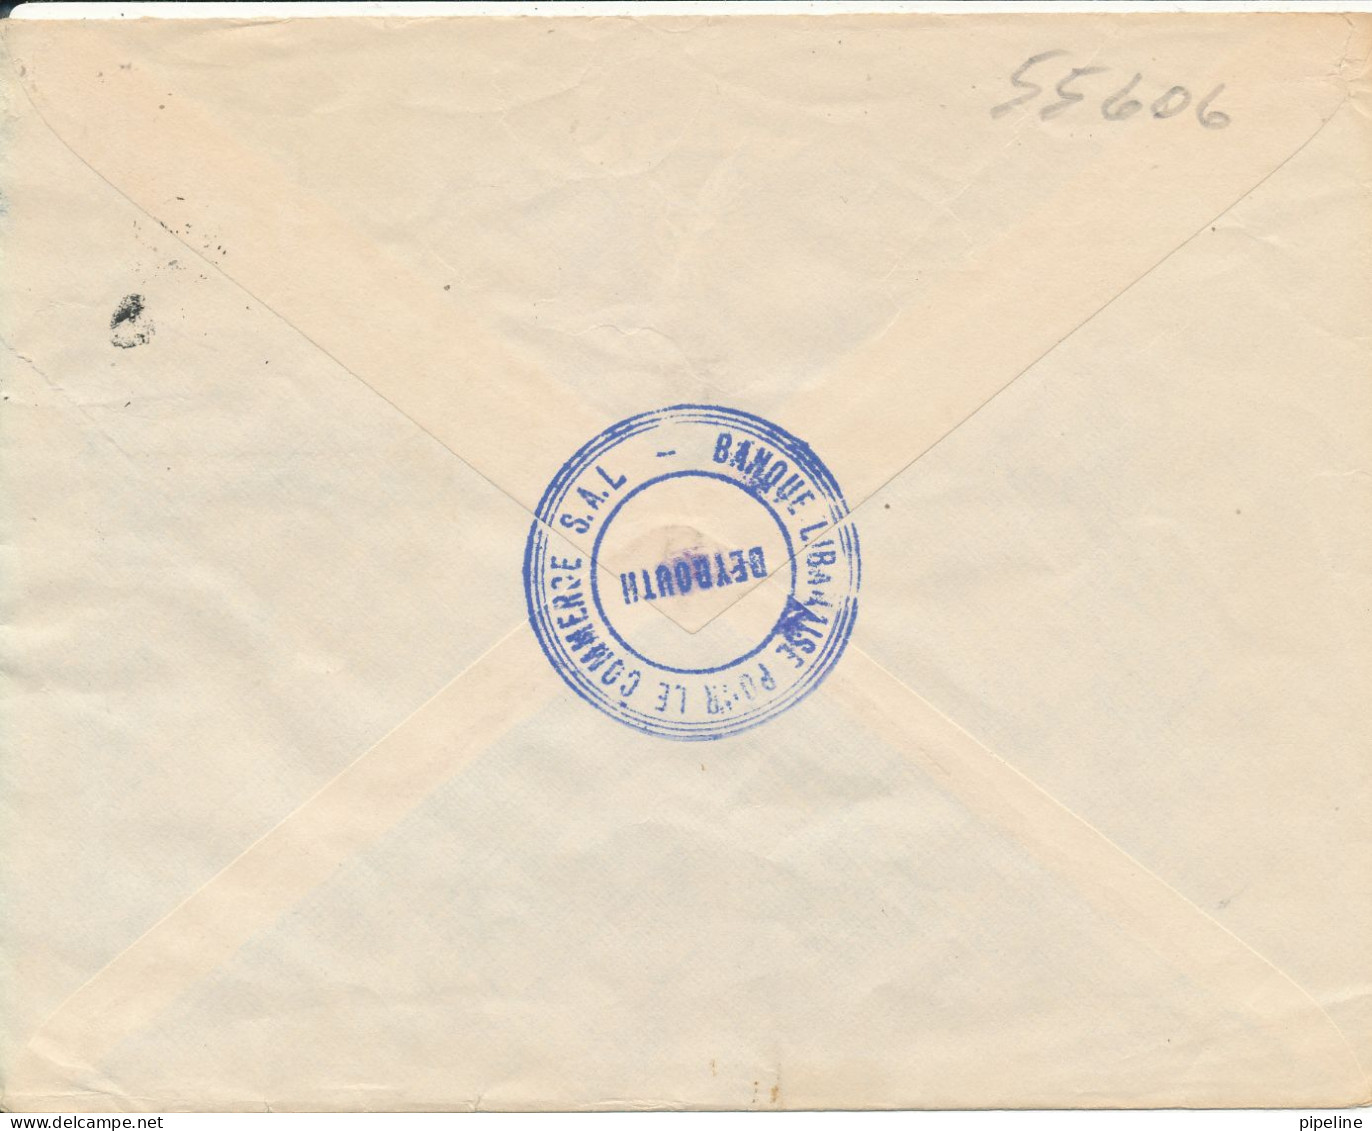 Lebanon Registered Bank Cover Sent Air Mail To Denmark  15-7-1972 Topic Stamps - Lebanon